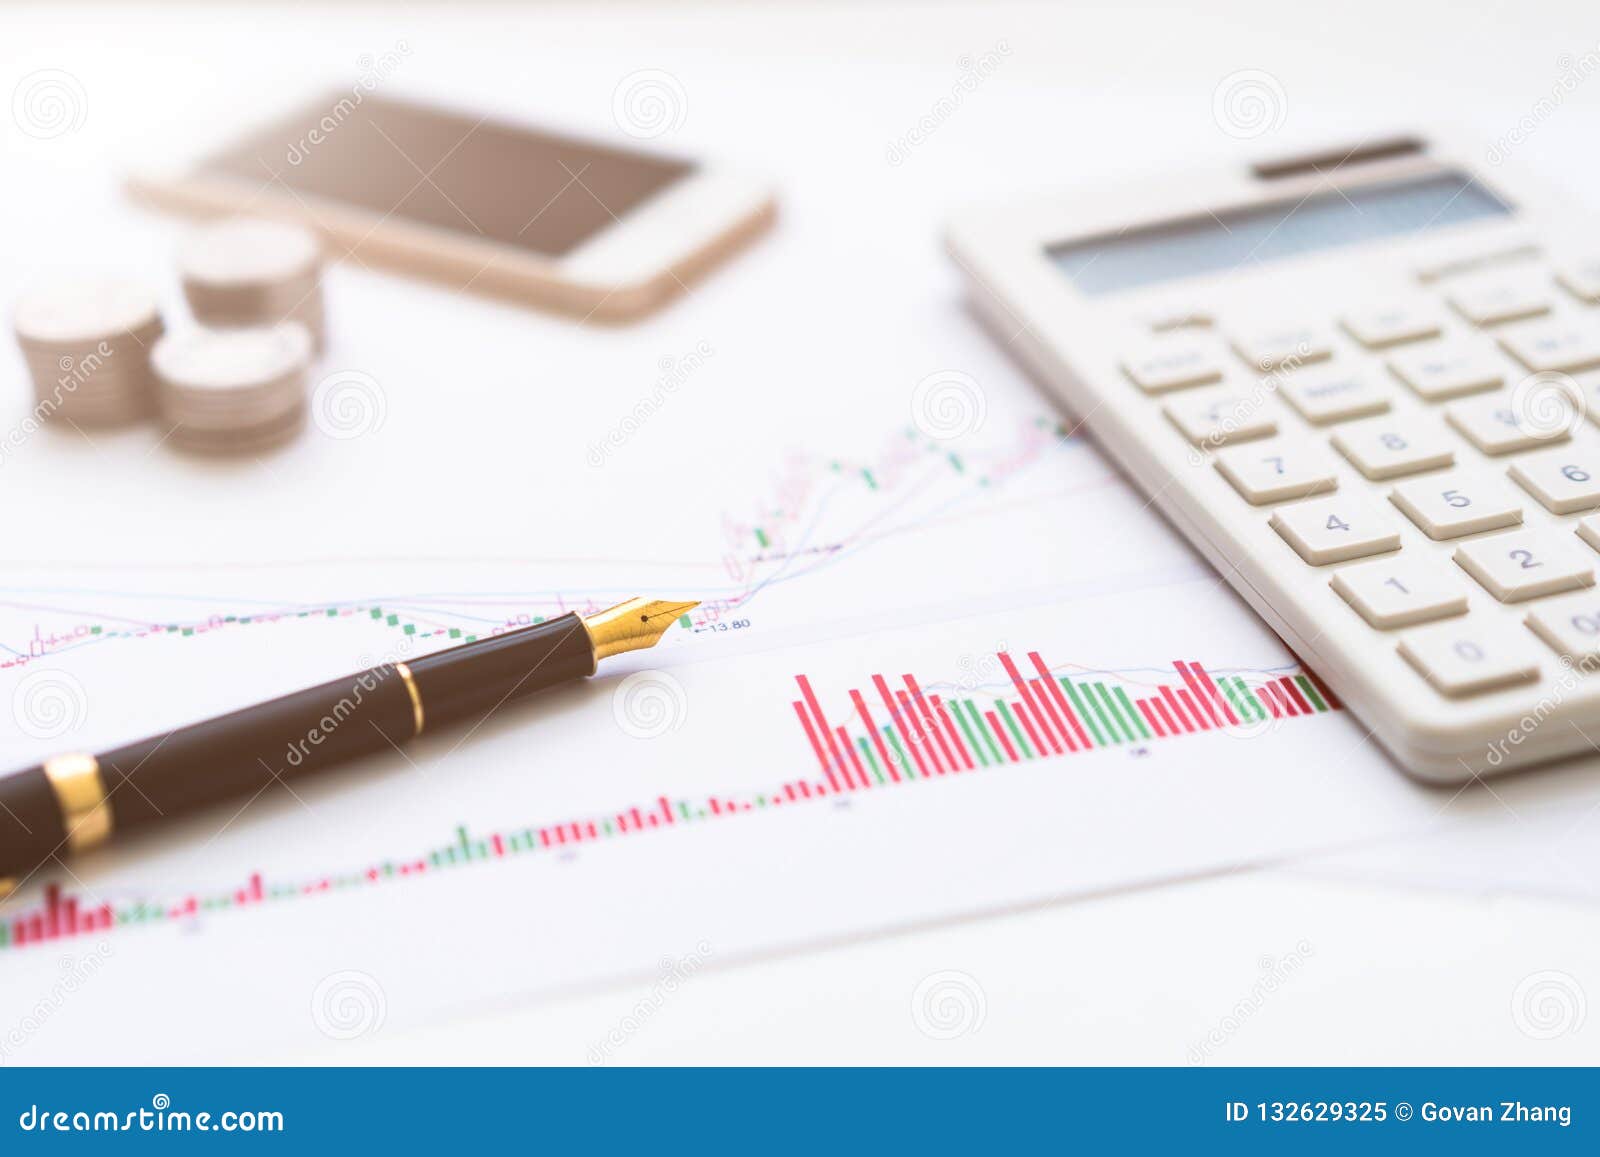 Background Pen, K-Line Diagram, Mobile Phone, Calculator Stock Image -  Image of financial, background: 132629325